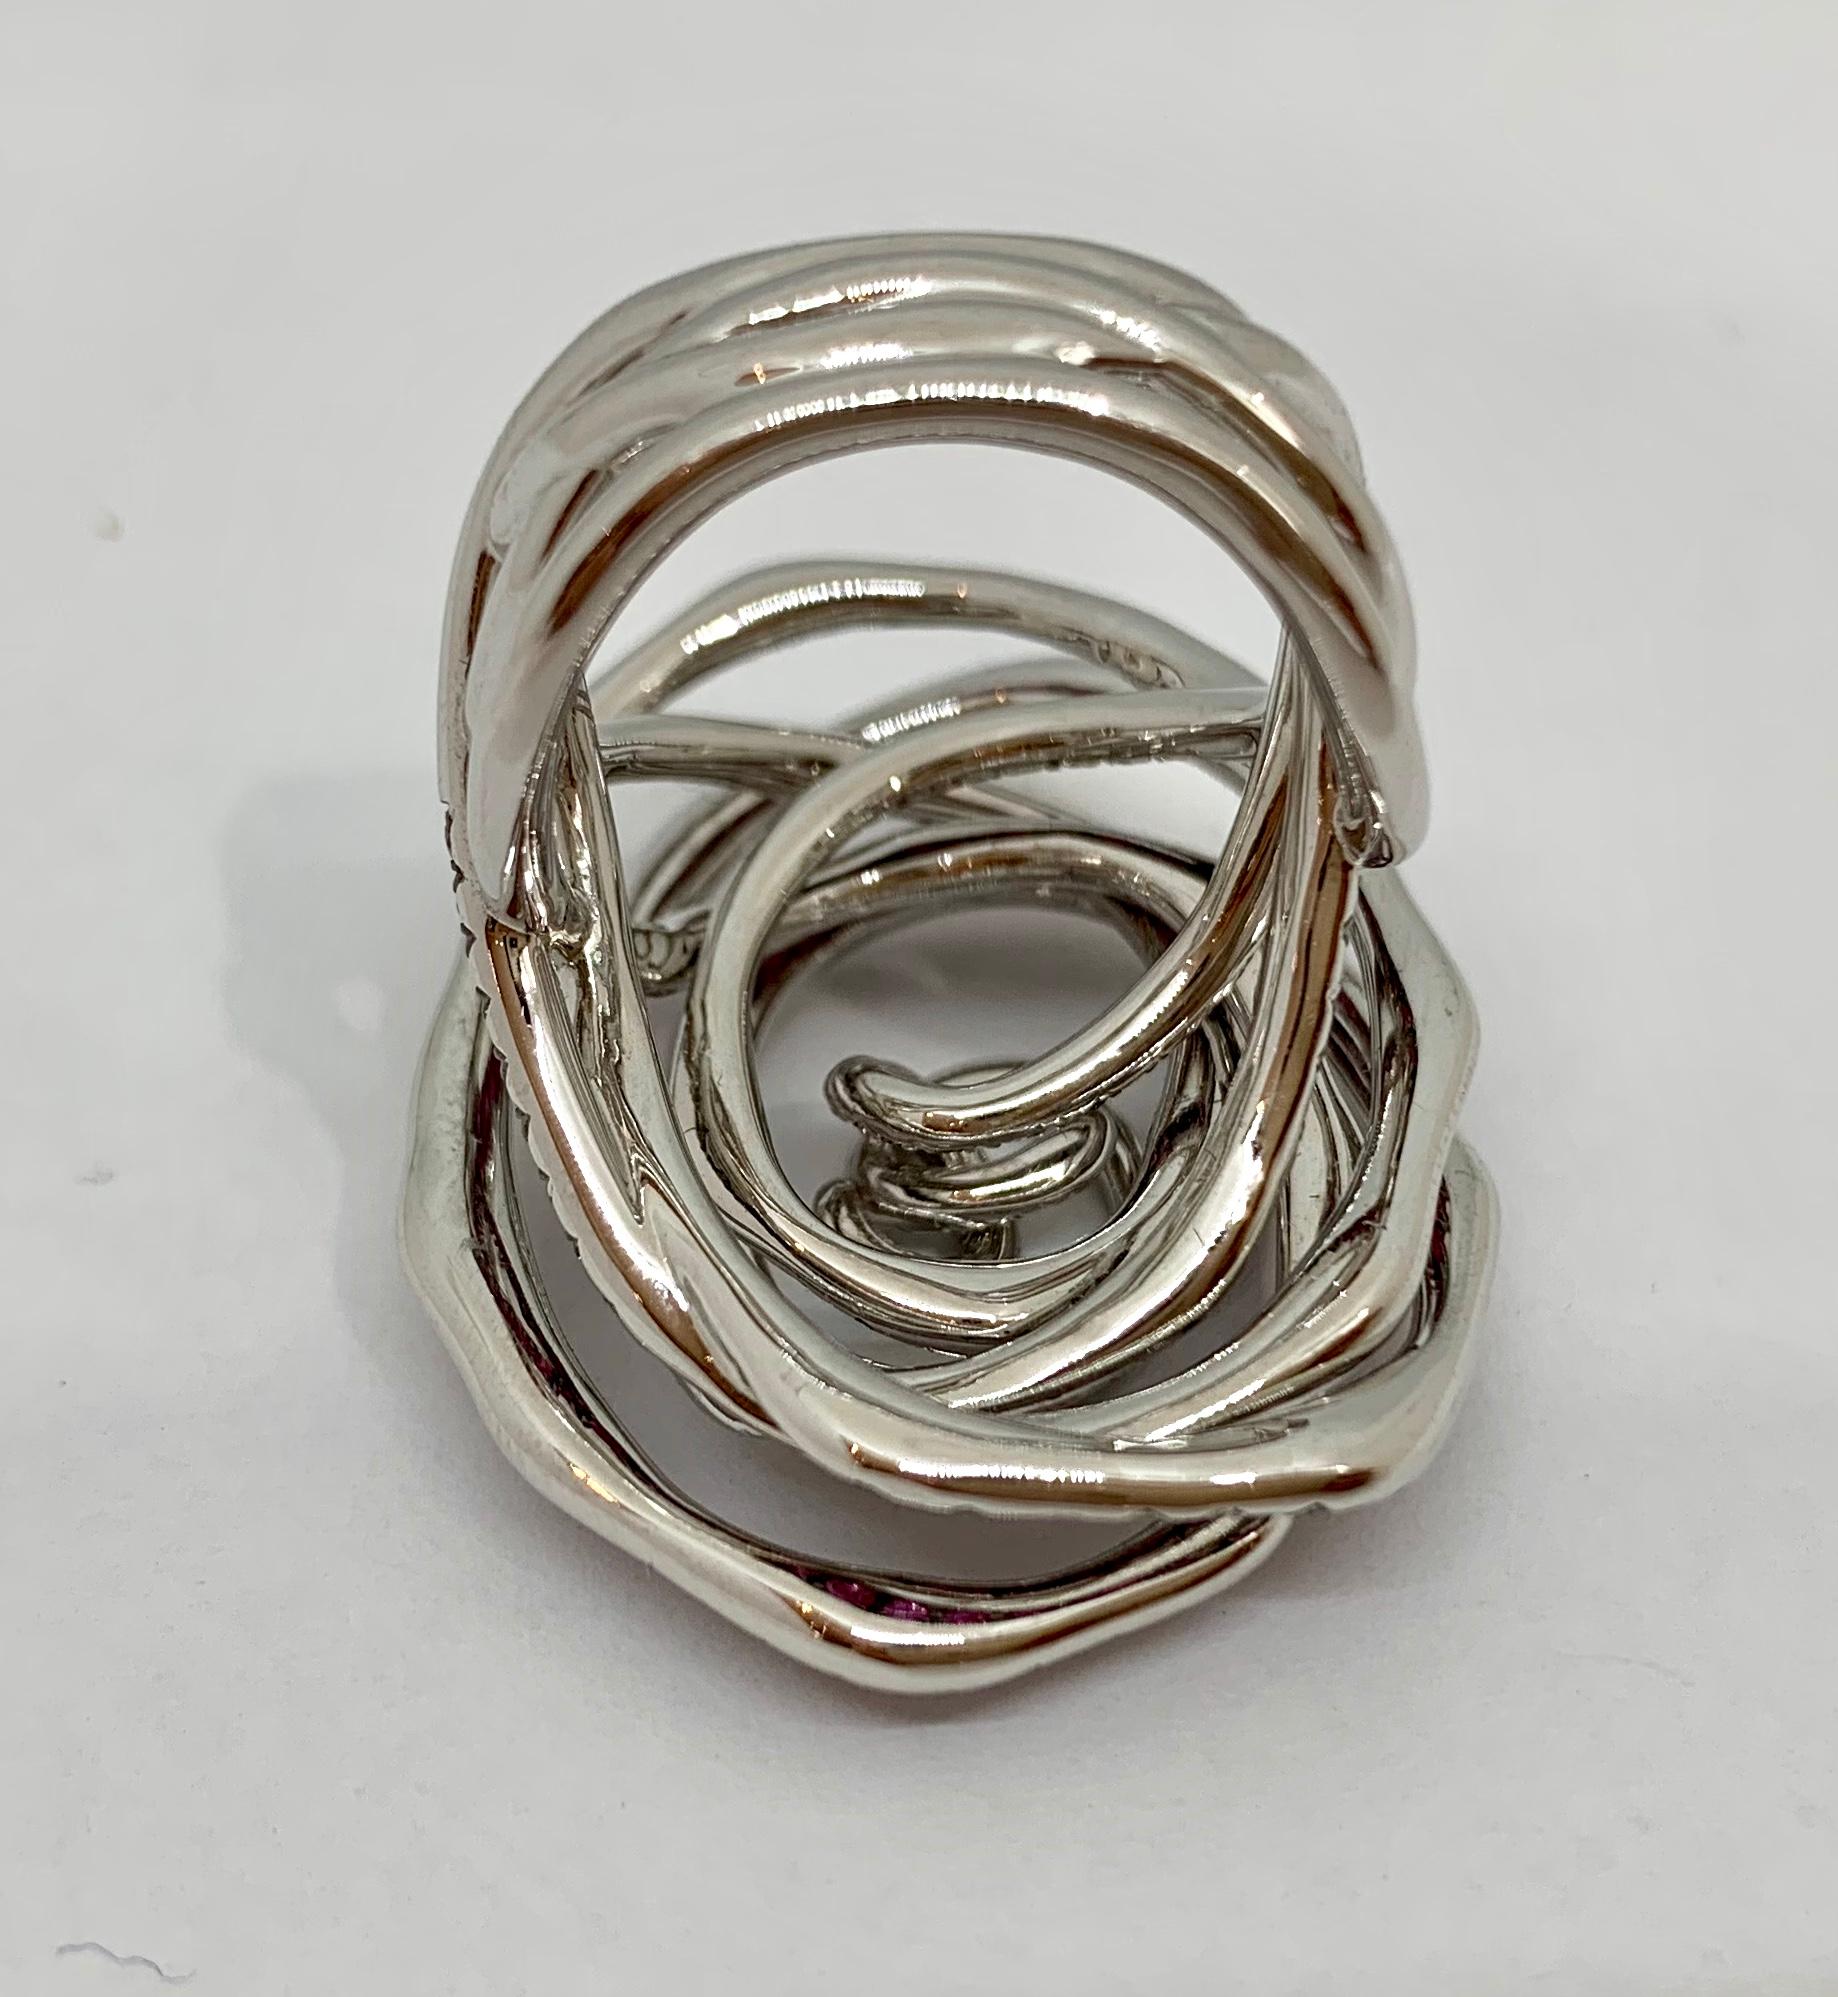 Margot McKinney 18K Gold Swirl Ring Set with White Diamonds and Pink Sapphires 6